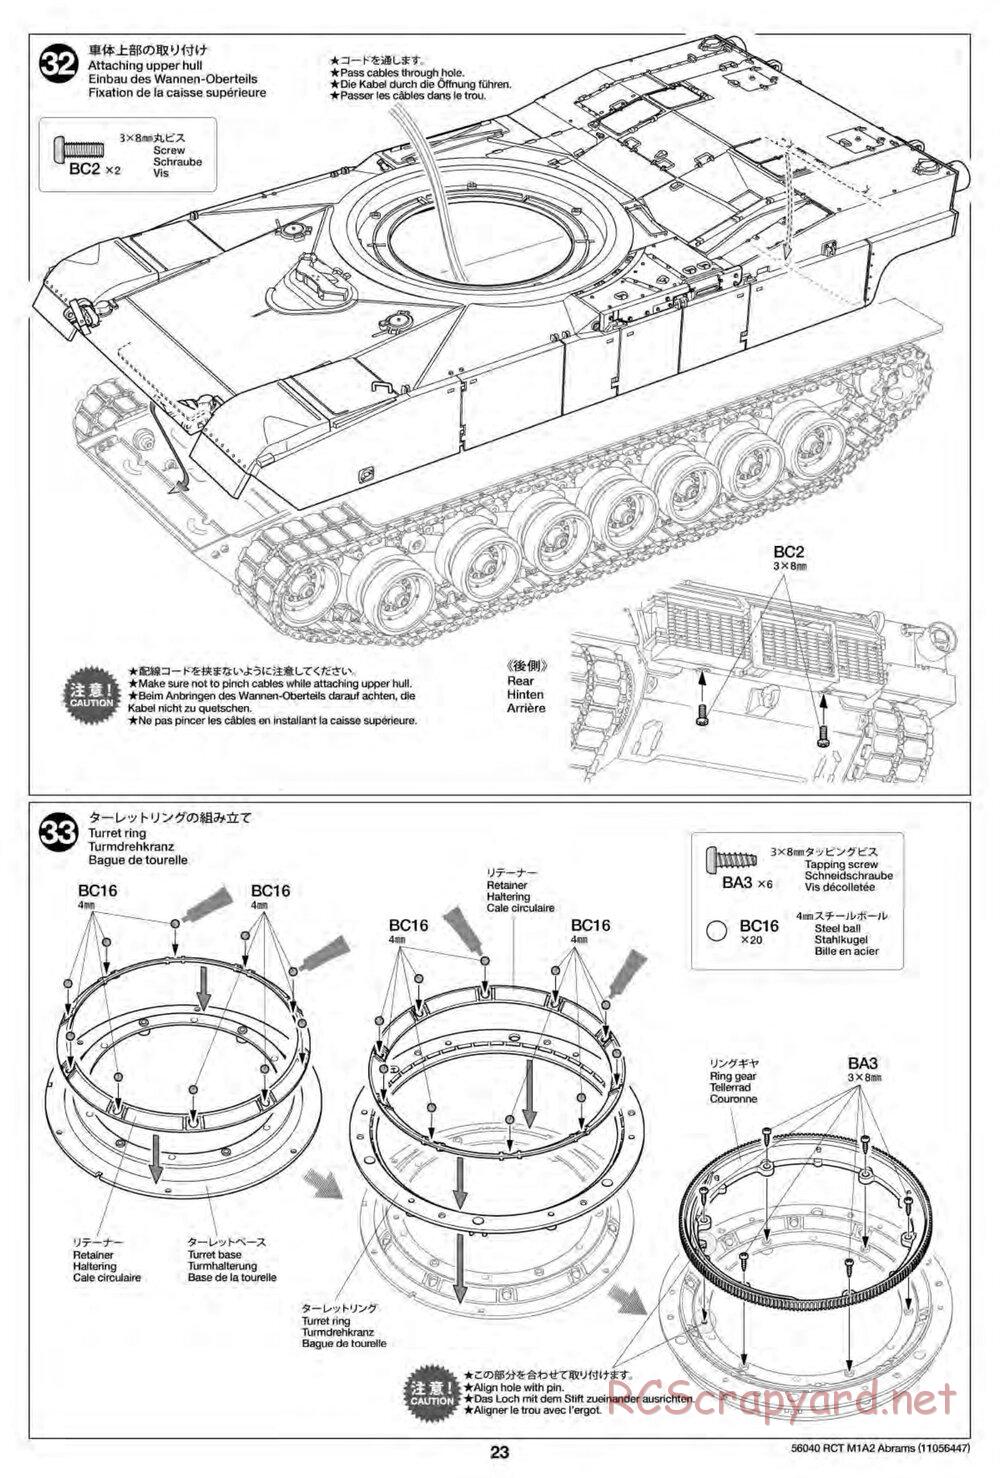 Tamiya - U.S. Main Battle Tank M1A2 Abrams - 1/16 Scale Chassis - Manual - Page 23